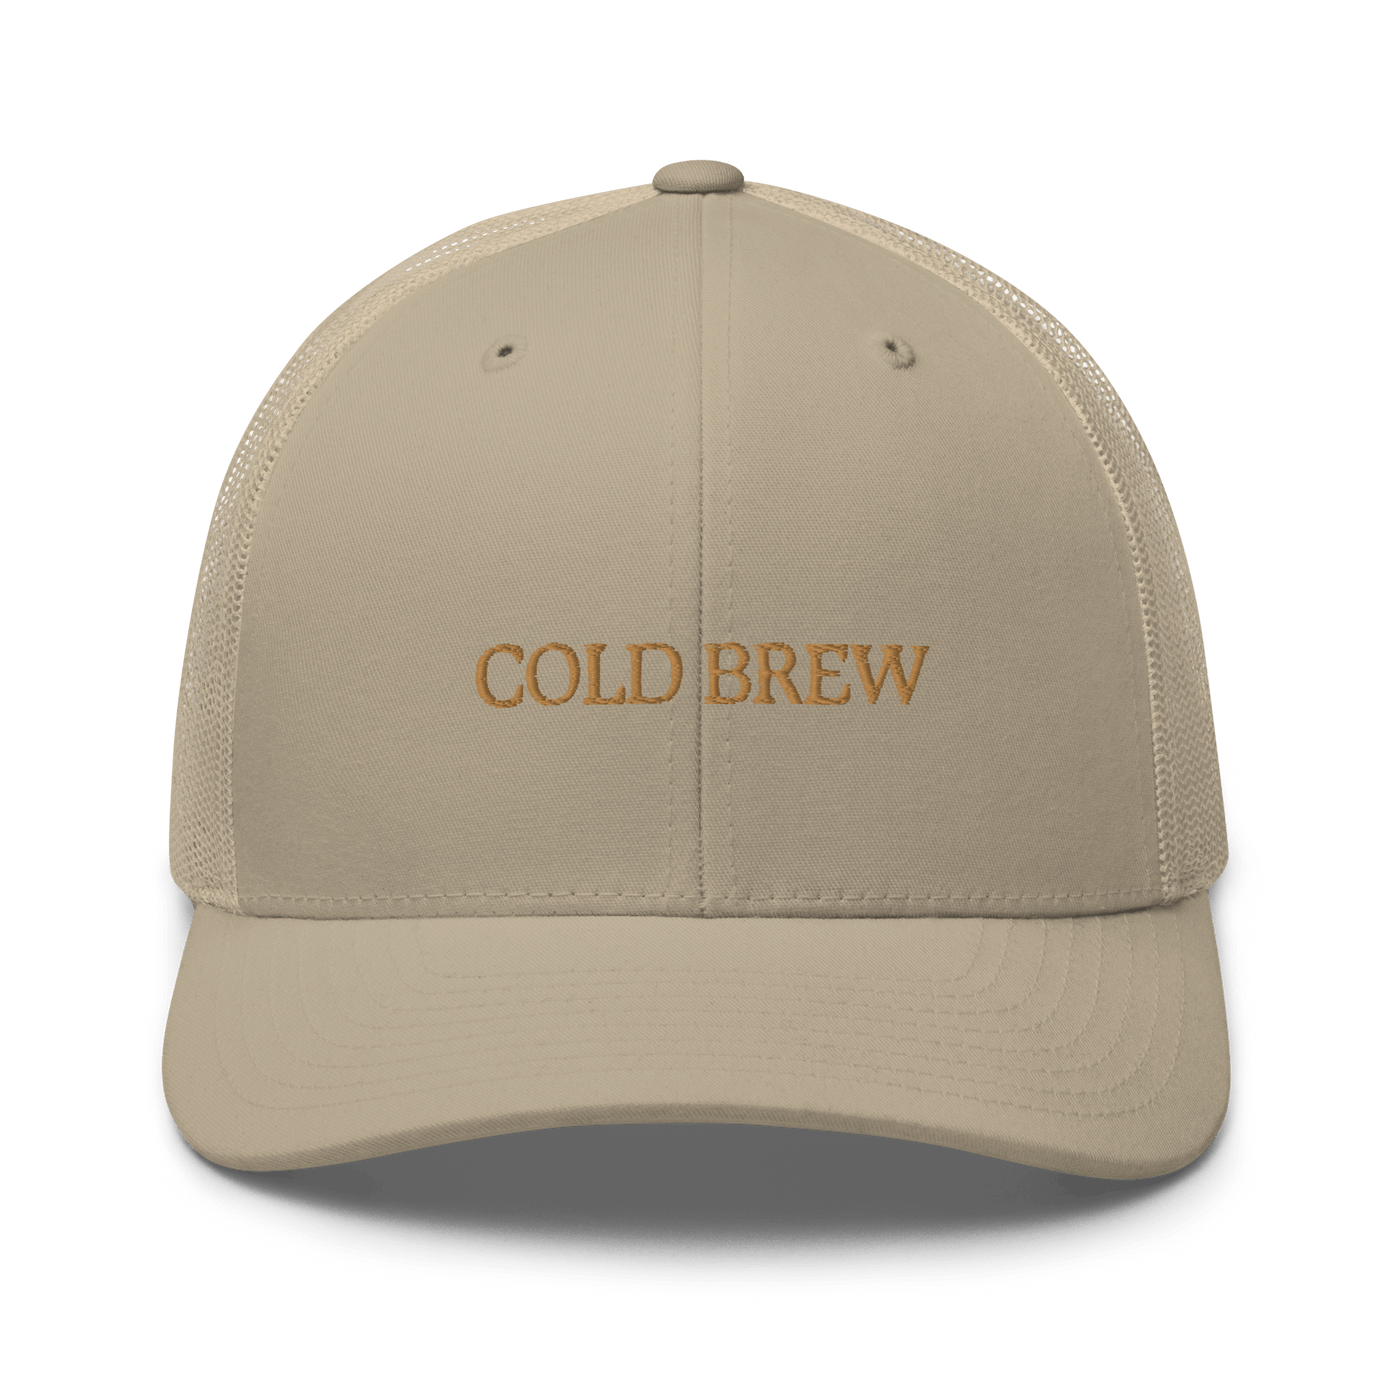 Cold Brew Trucker Cap - Khaki - - Just Another Cap Store